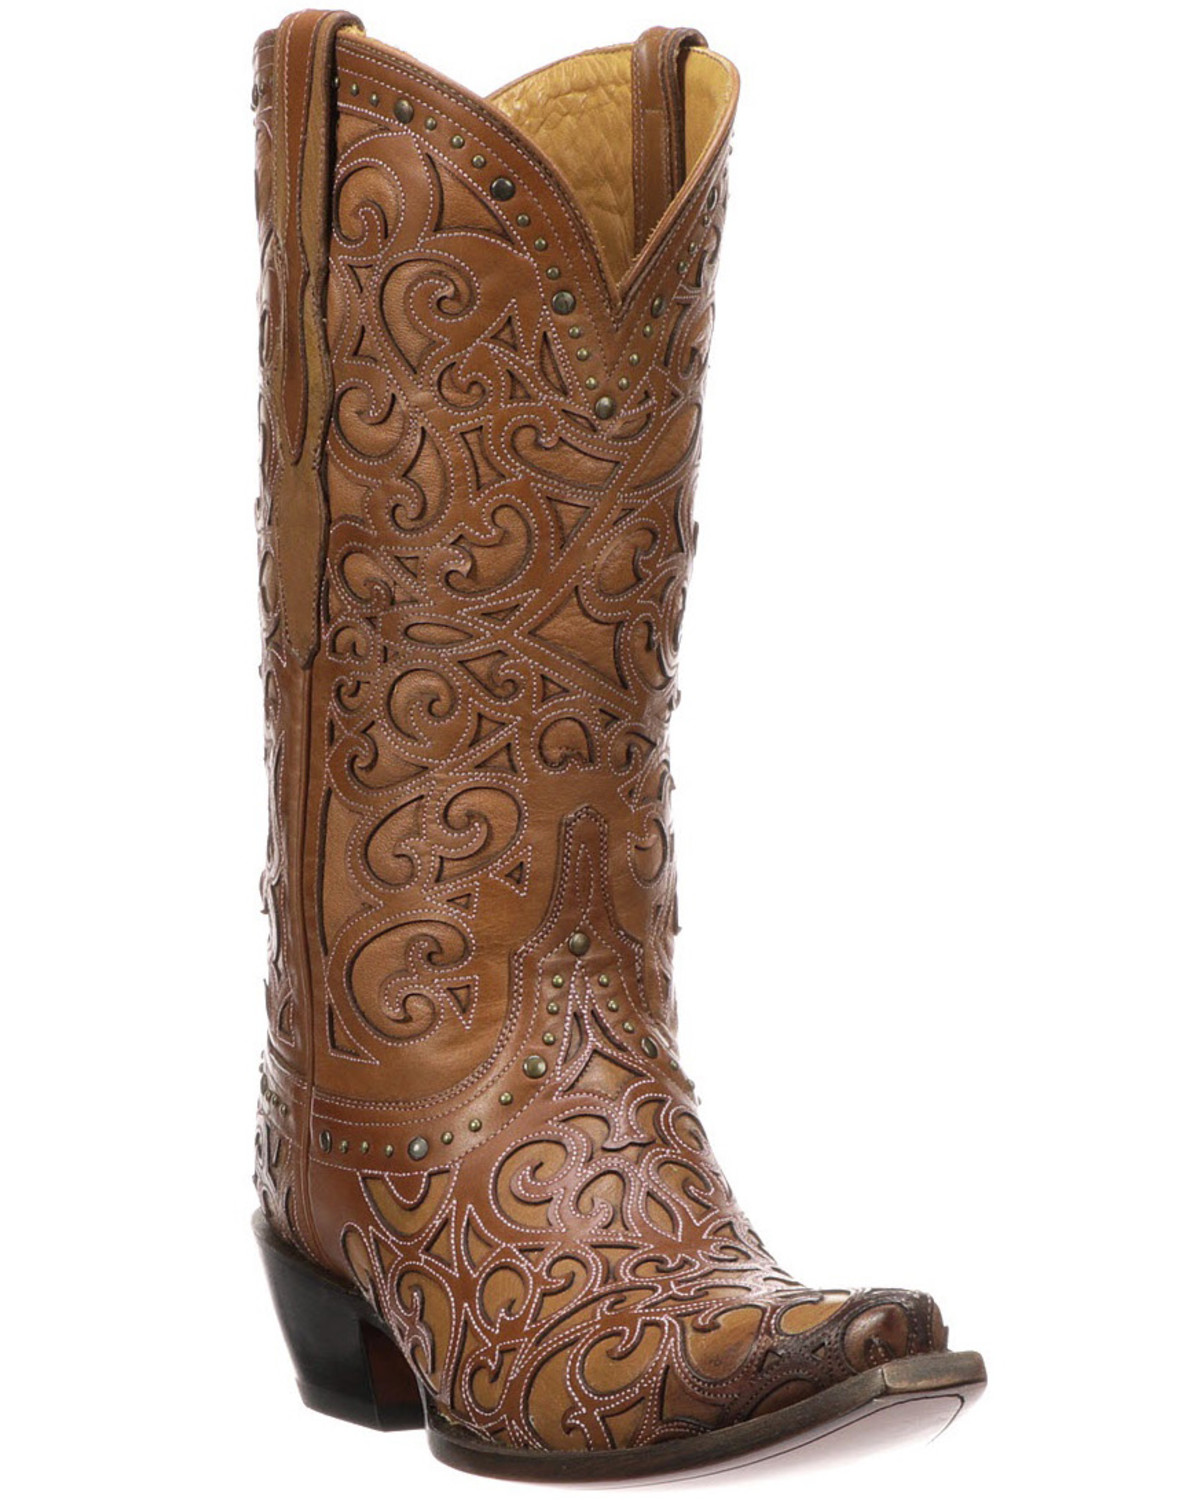 Sierra Cowgirl Boots - Snip Toe 